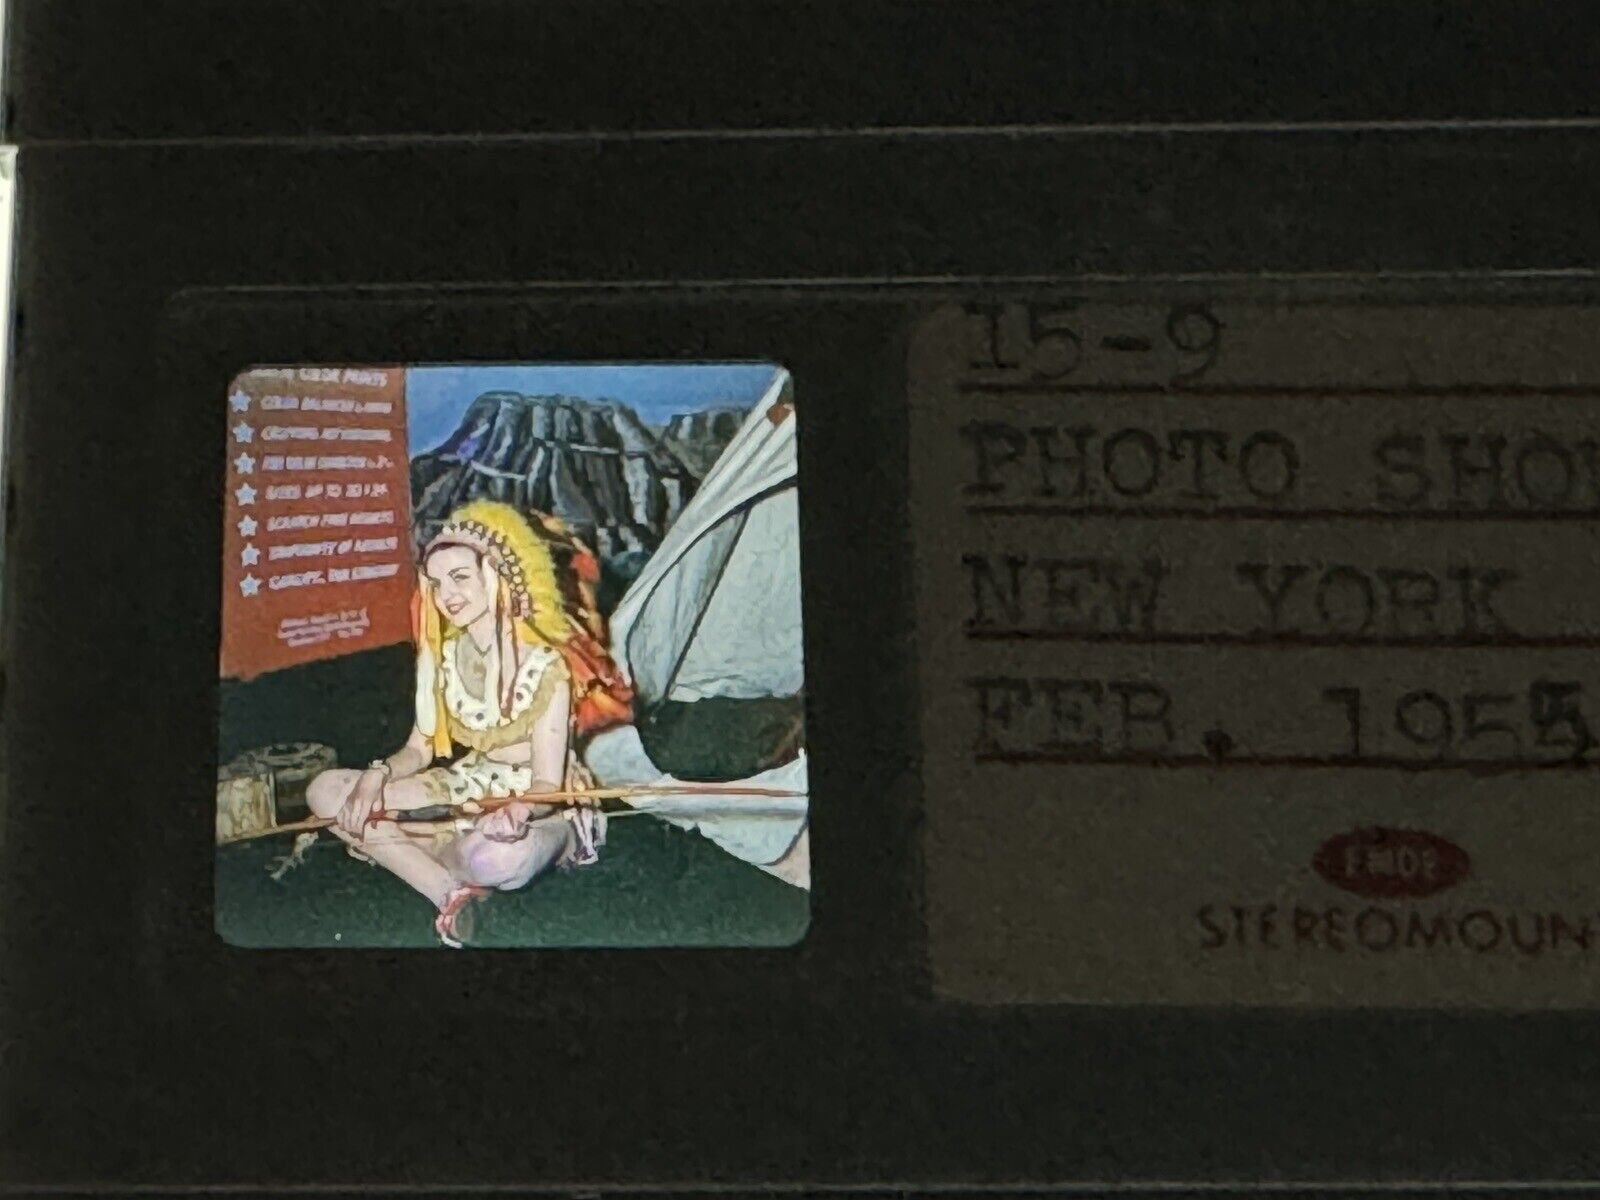 1955 Stereo Kodachrome Slides, New York Photo Show, Vintage Advertising, Women